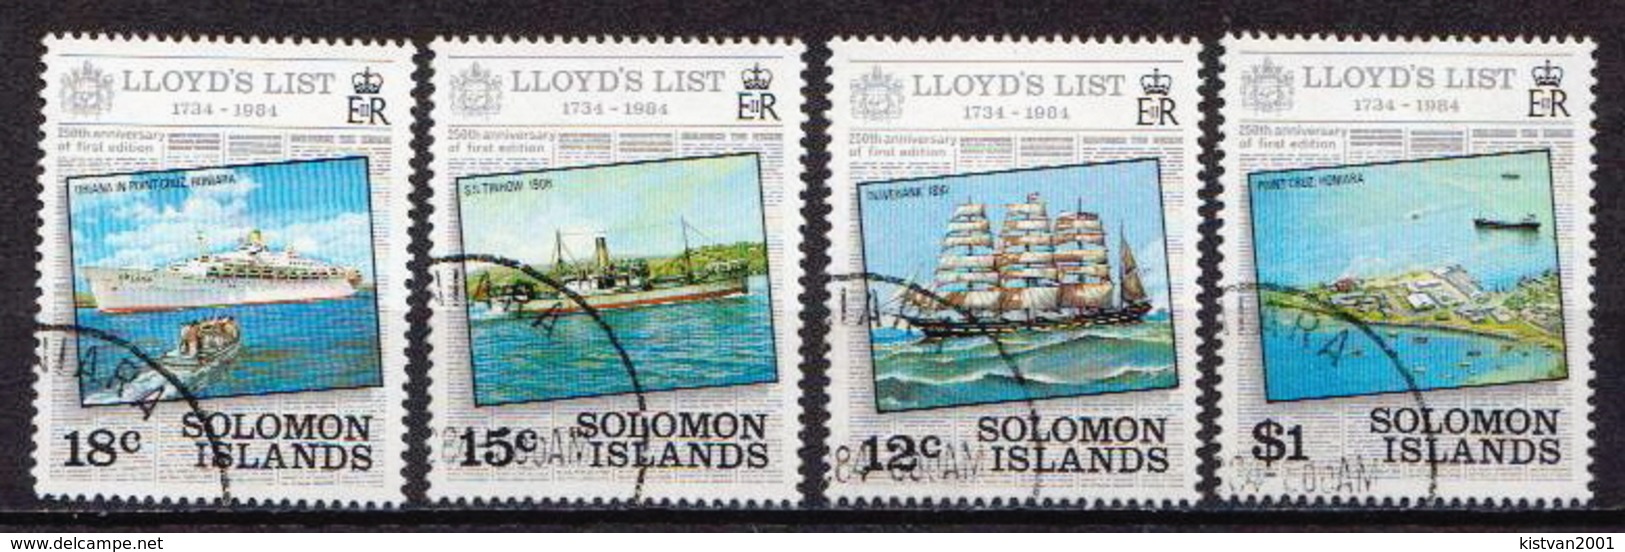 British Solomon Islands Used Set - Ships